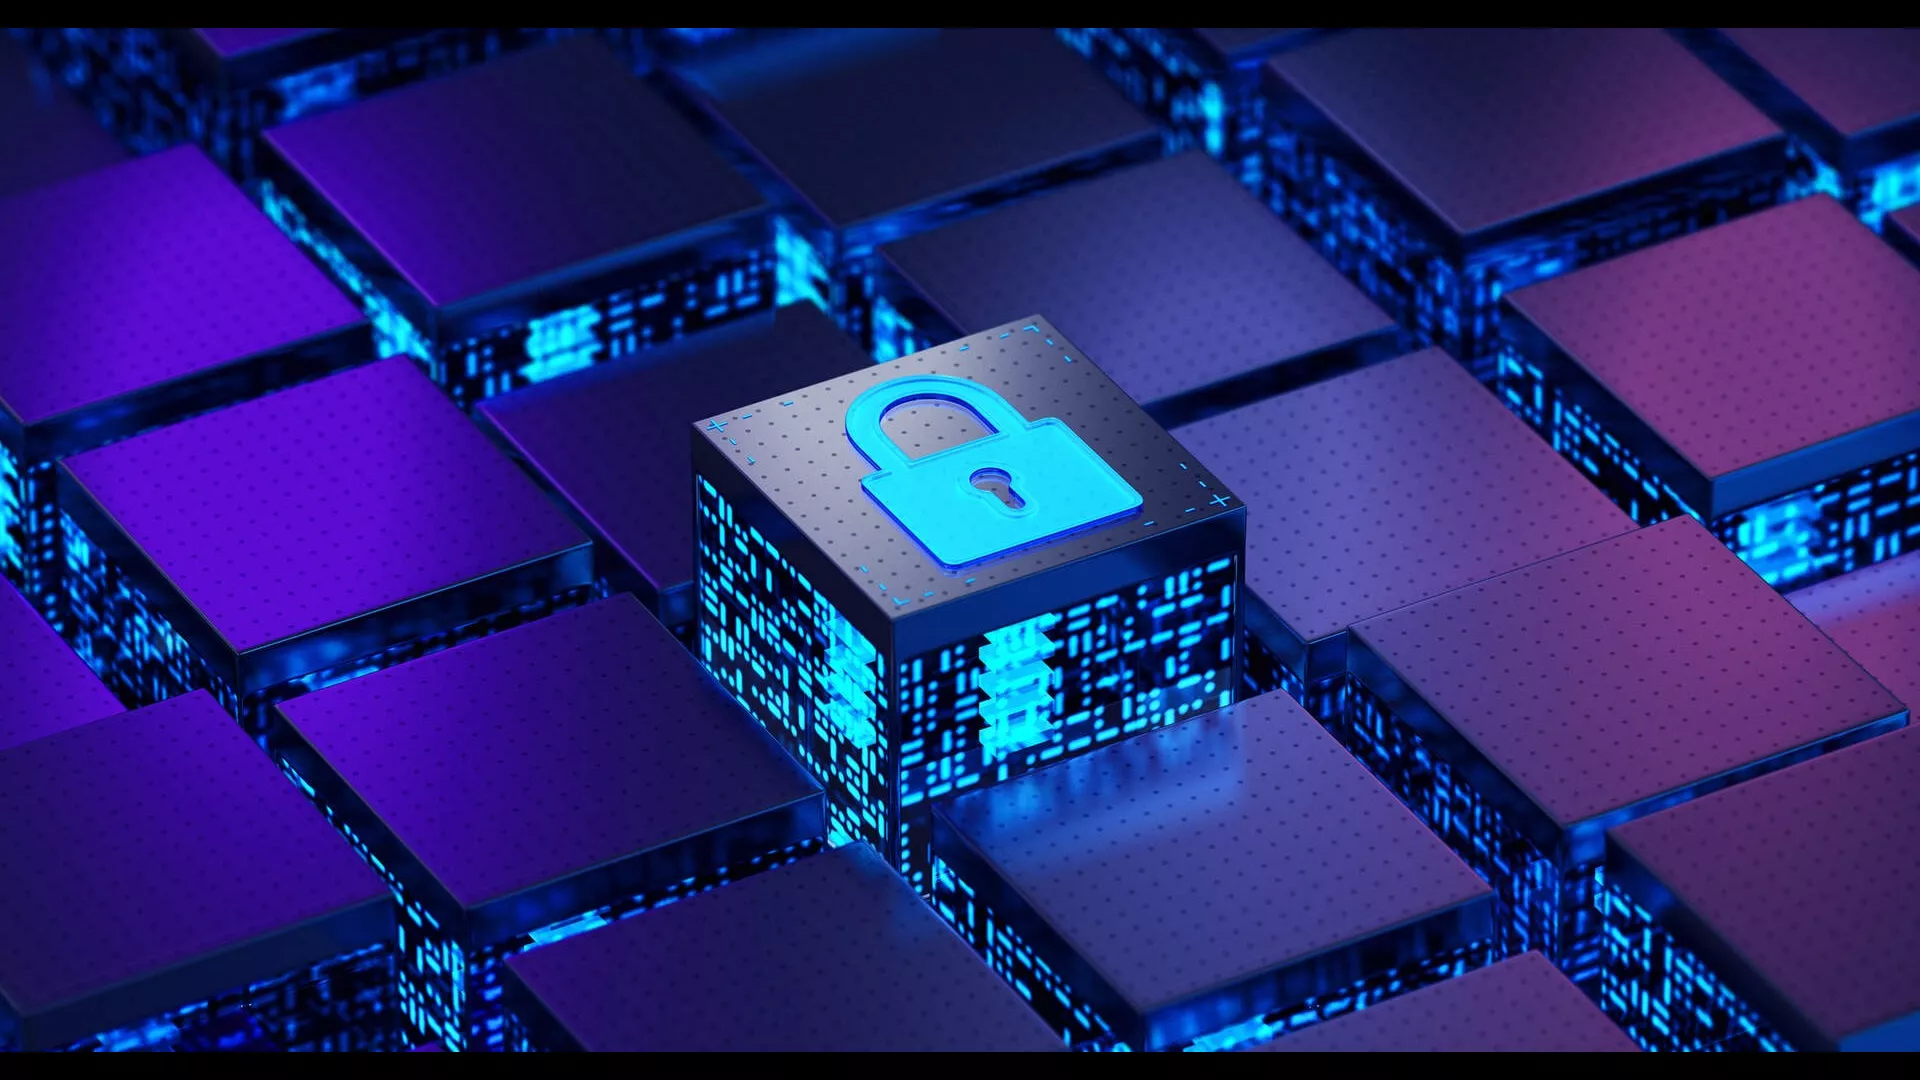 Digital Lock on Blue and Purple background